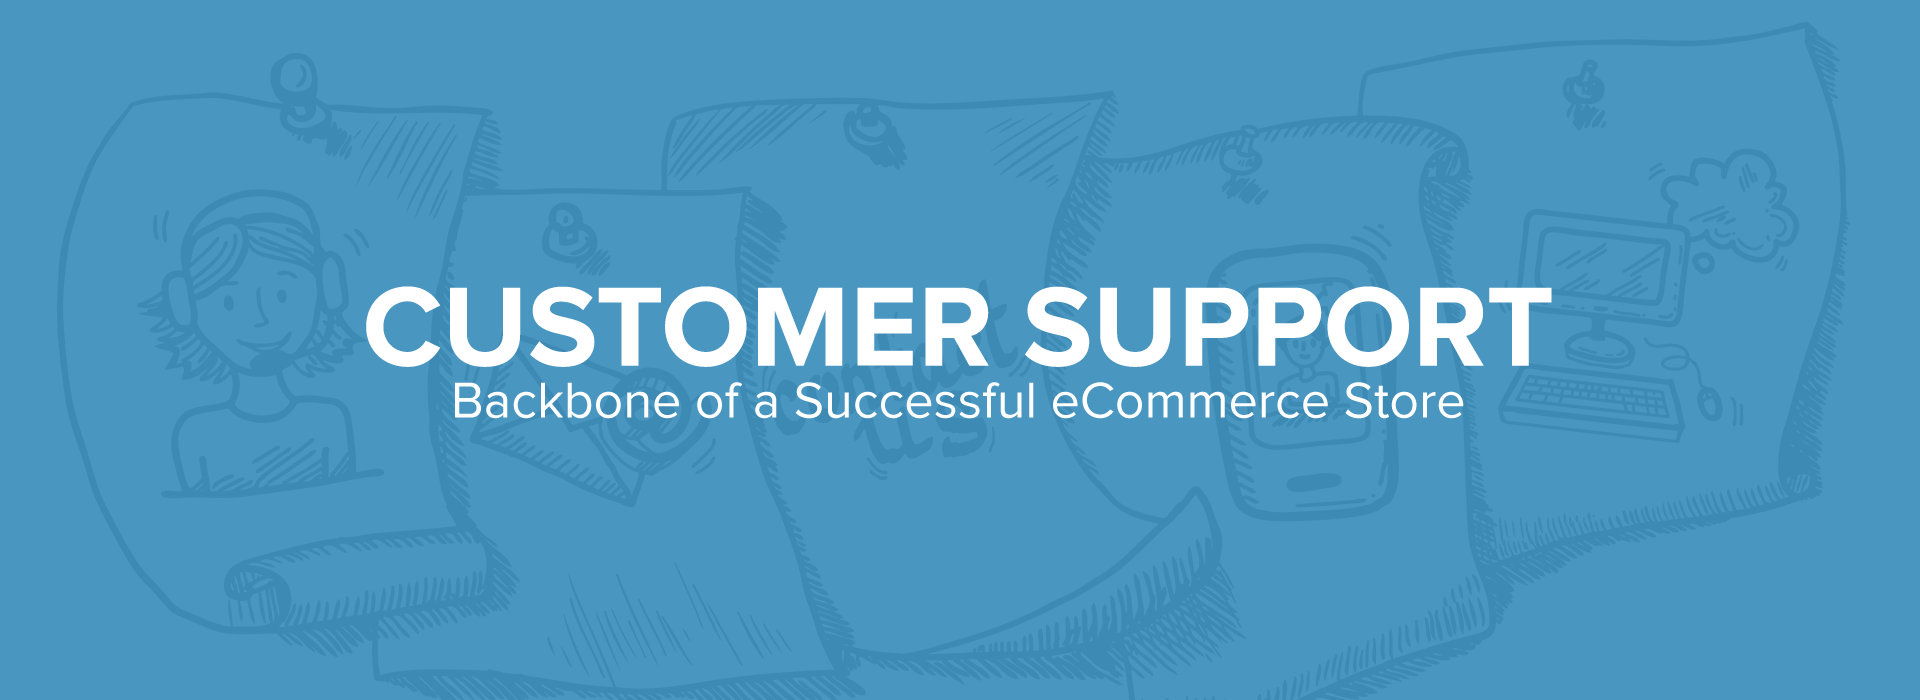 Customer Support: Backbone of a Successful eCommerce Store